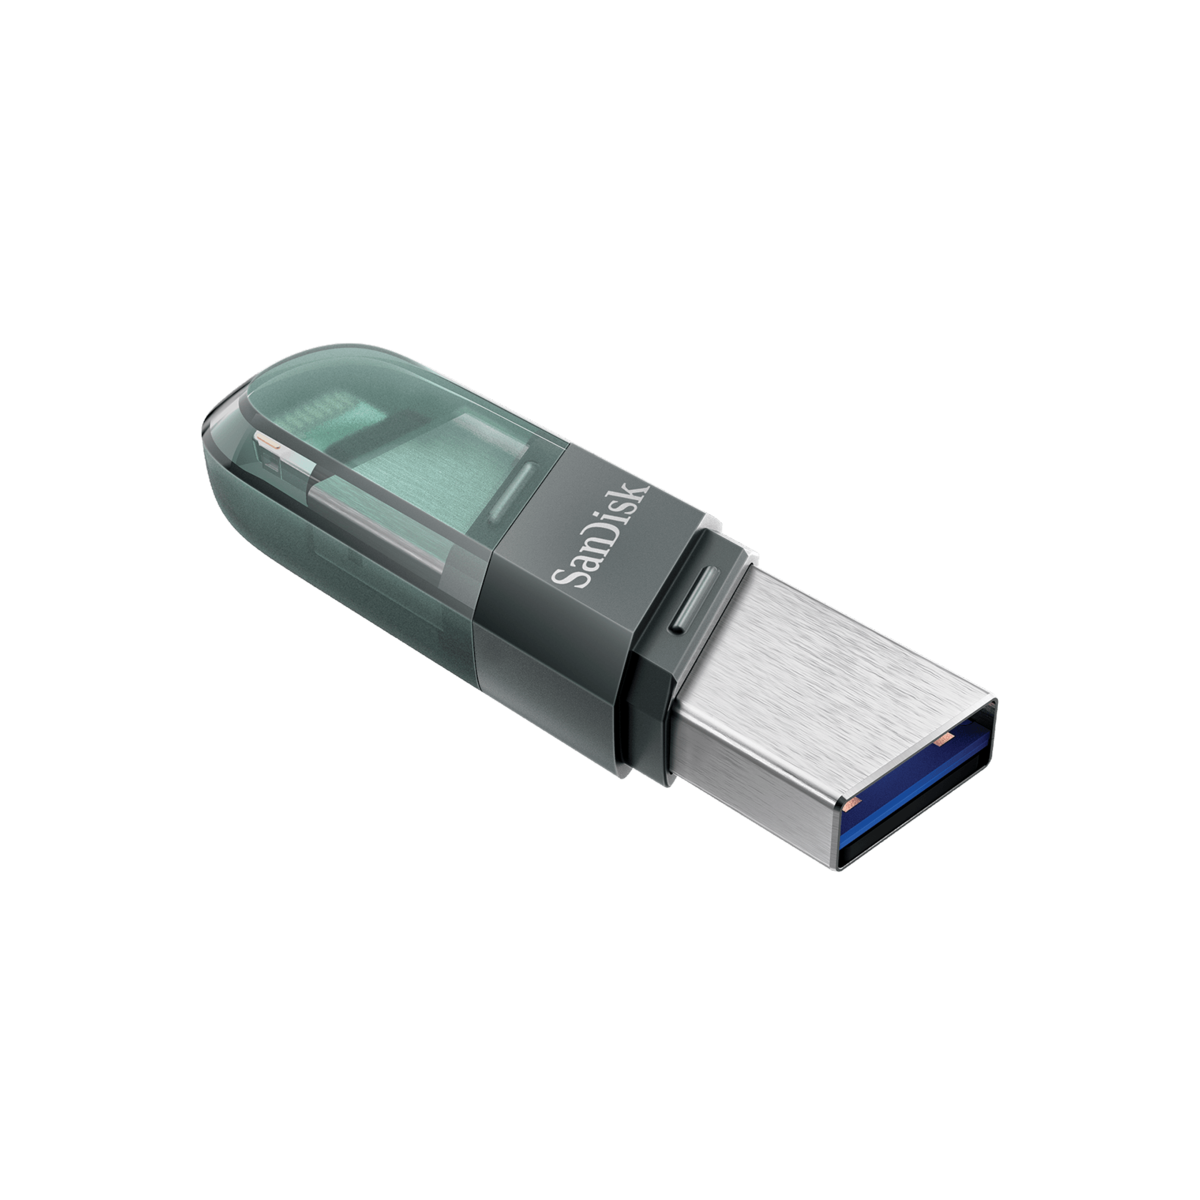 SDIX90N-064G-GN6NN 64GB USB 3.1 iXpand Flash Drive Flip Silver/Blue USB Flash Drives - Newegg.com